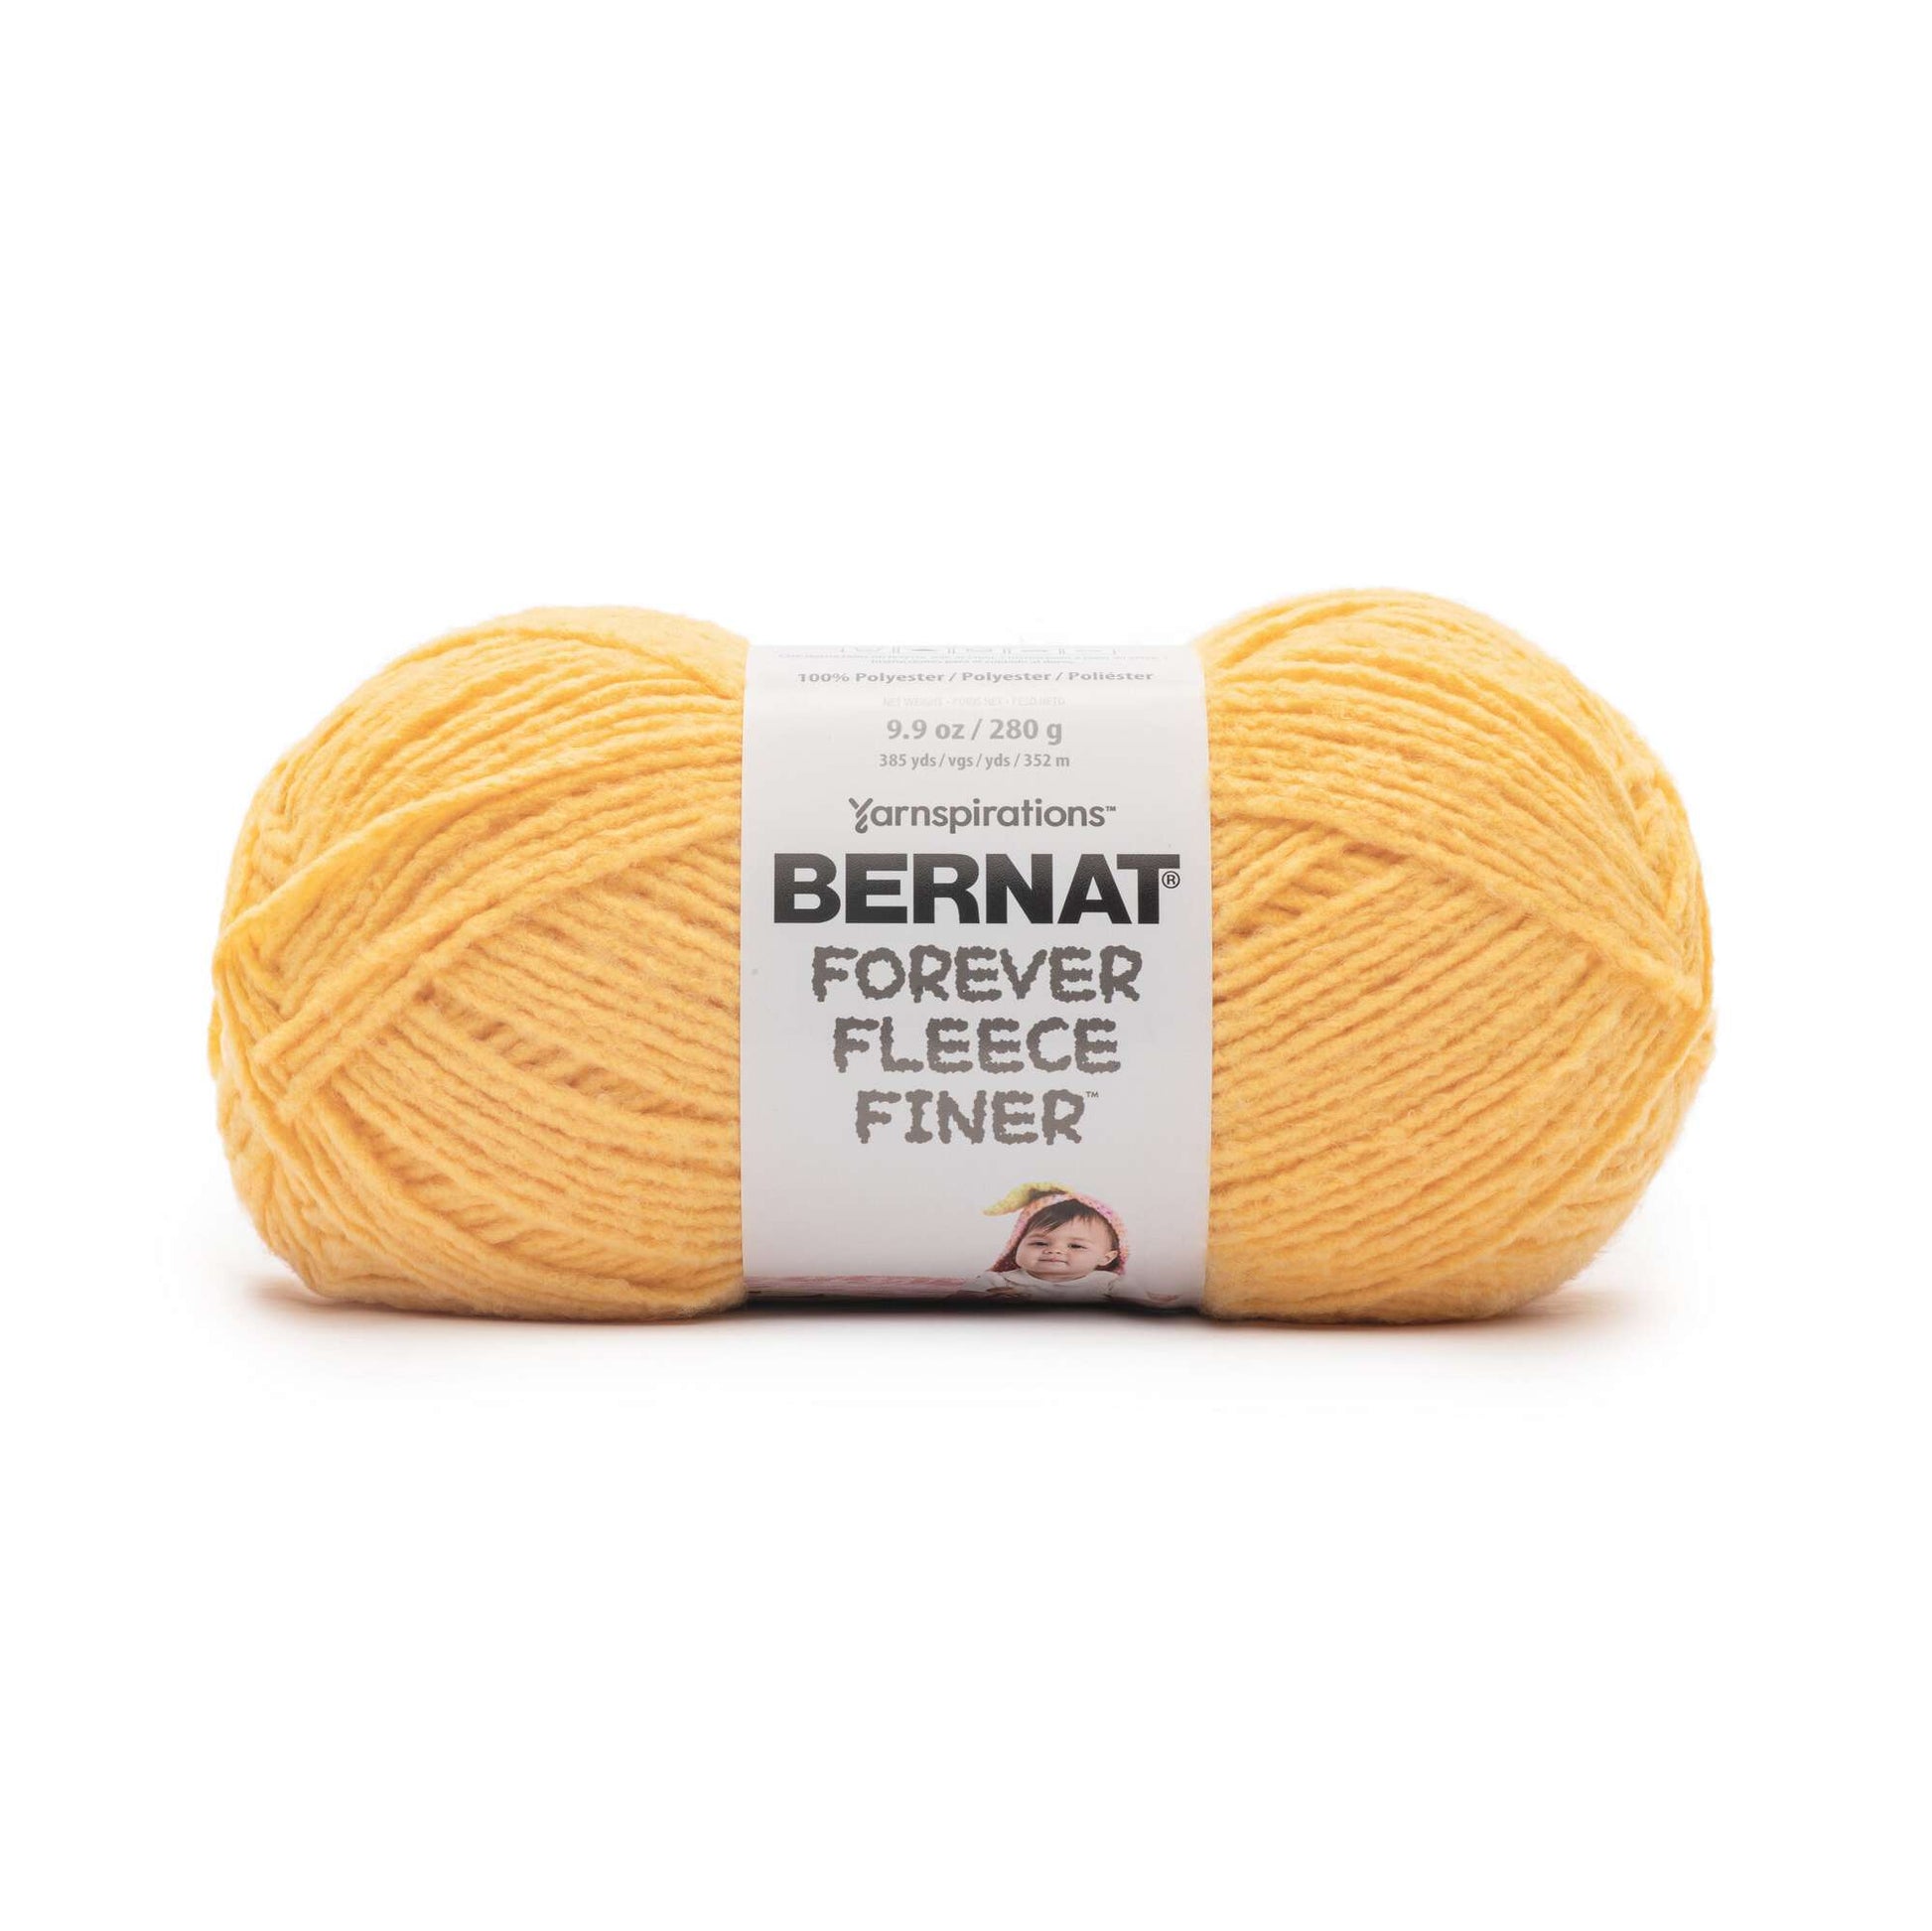 Bernat Forever Fleece Finer Yarn - Clearance Shades